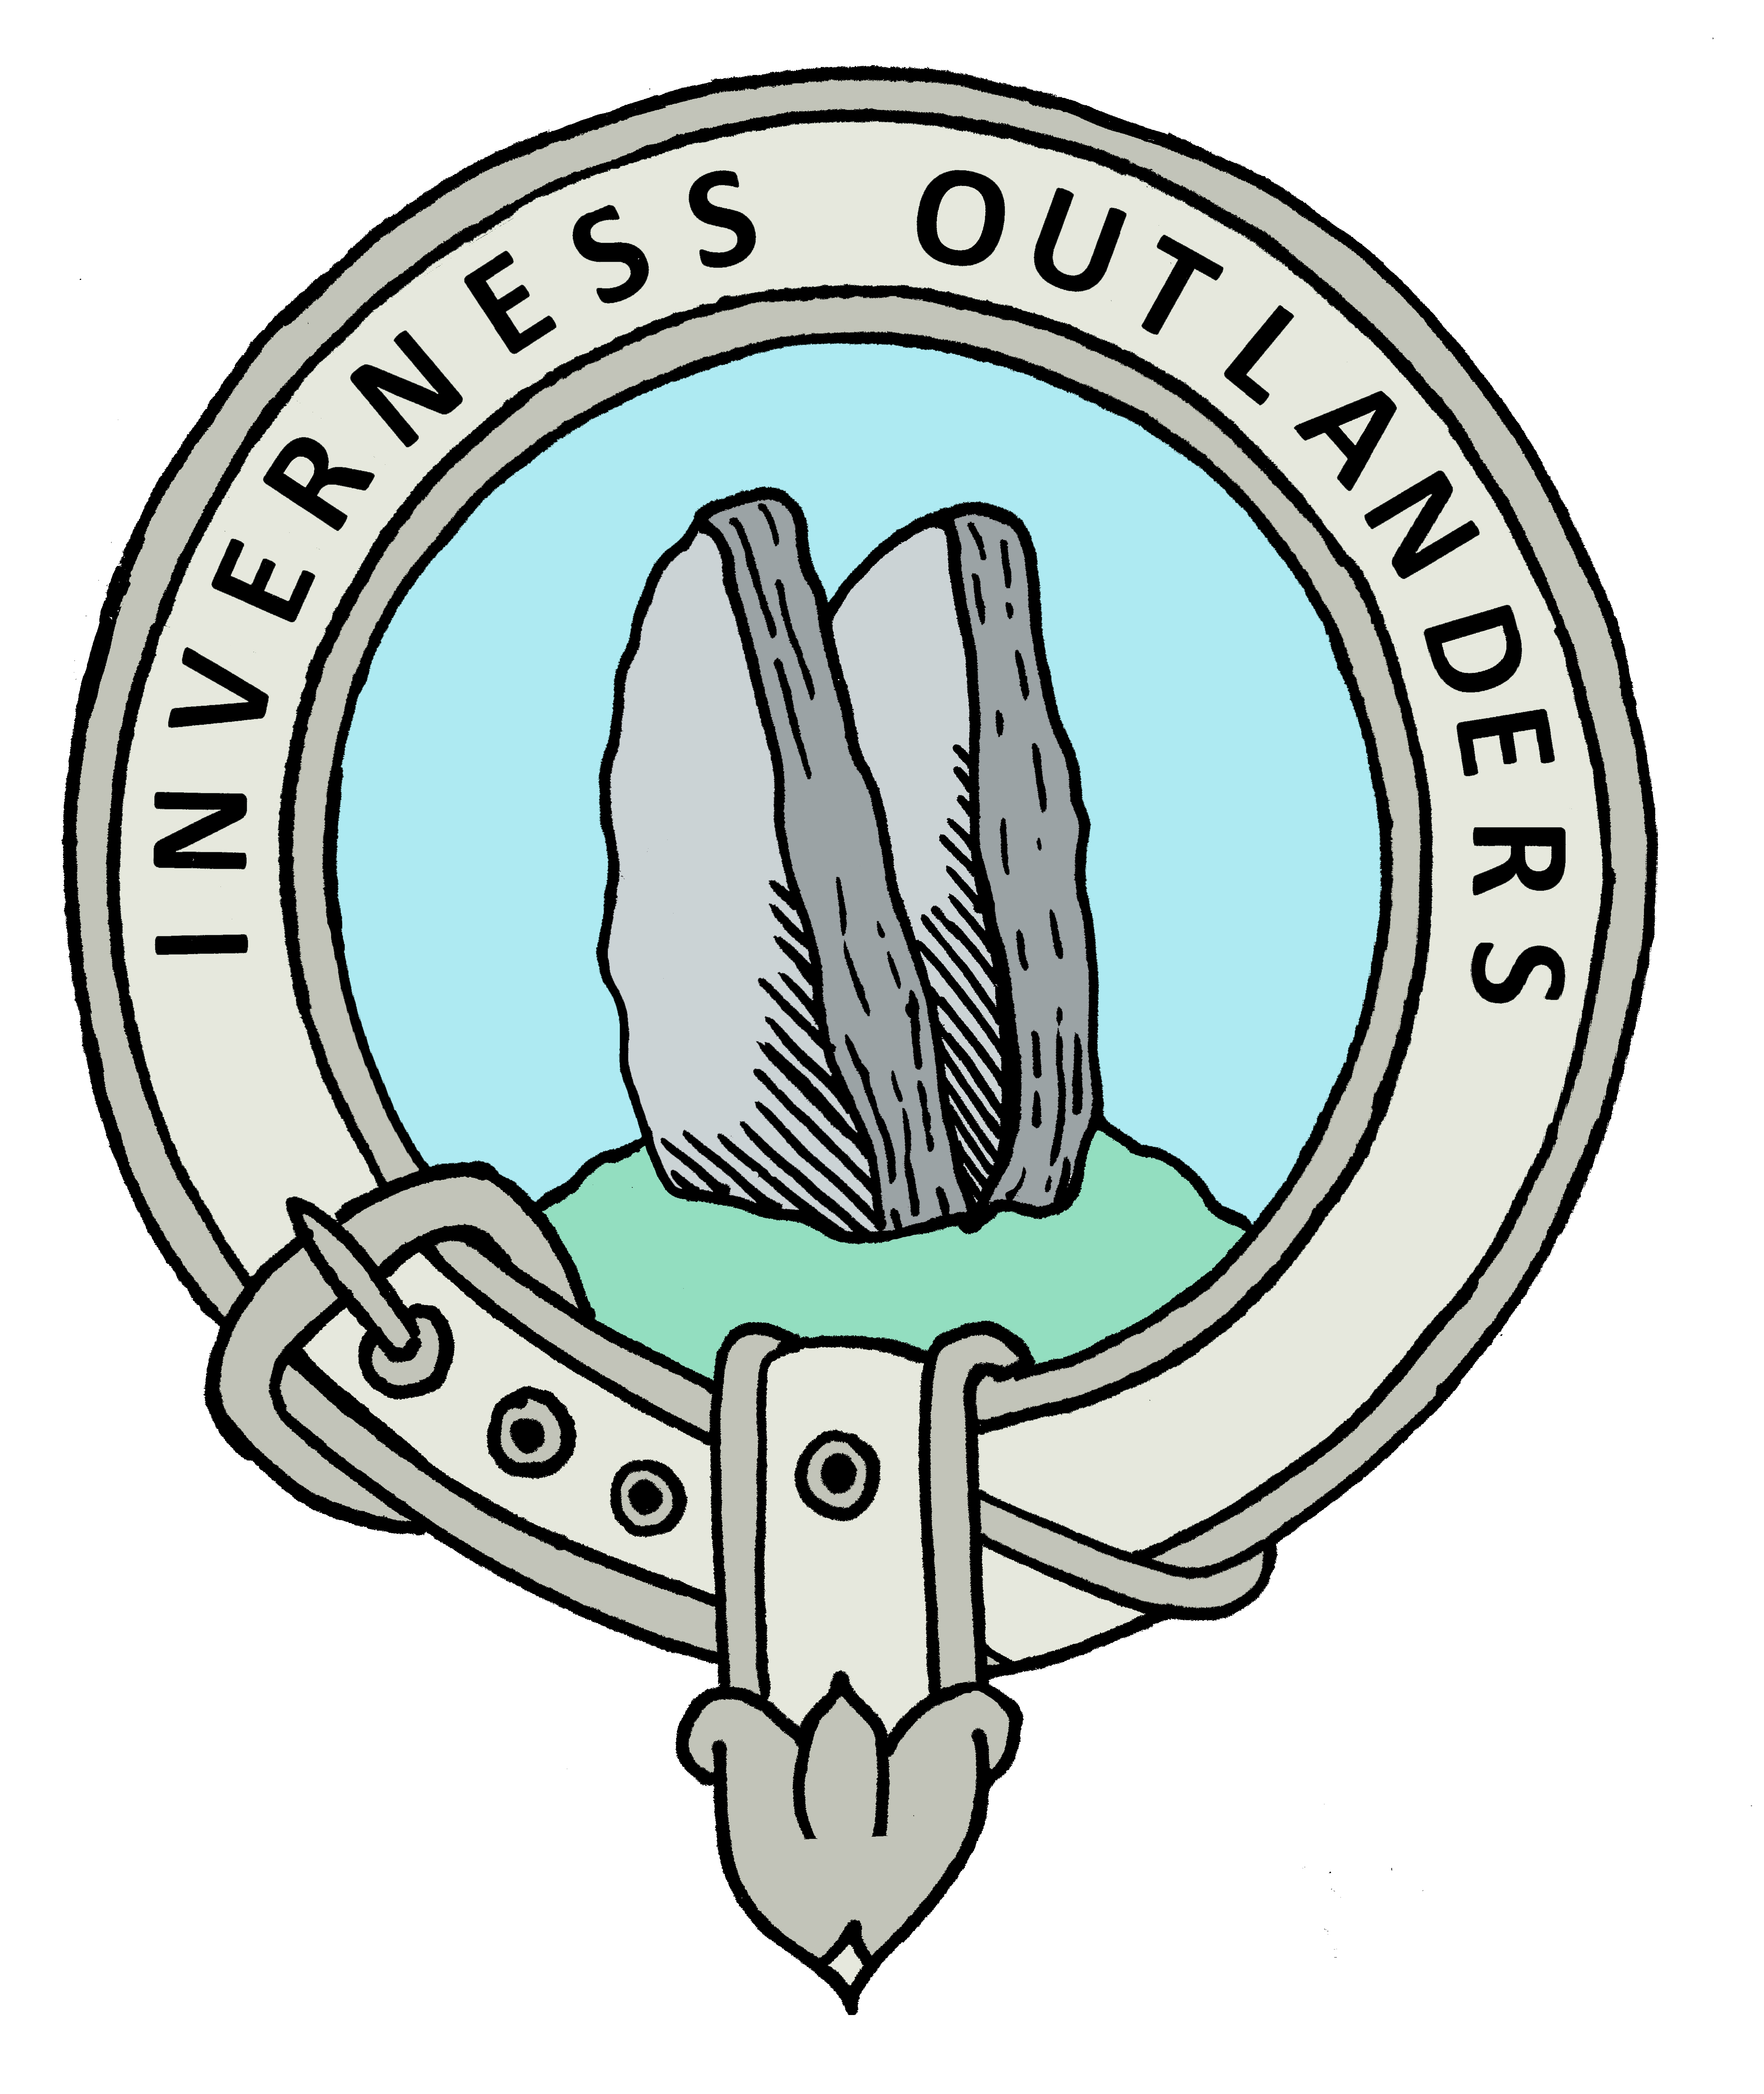 Inverness outlanders logo - colour 1 - big (1)